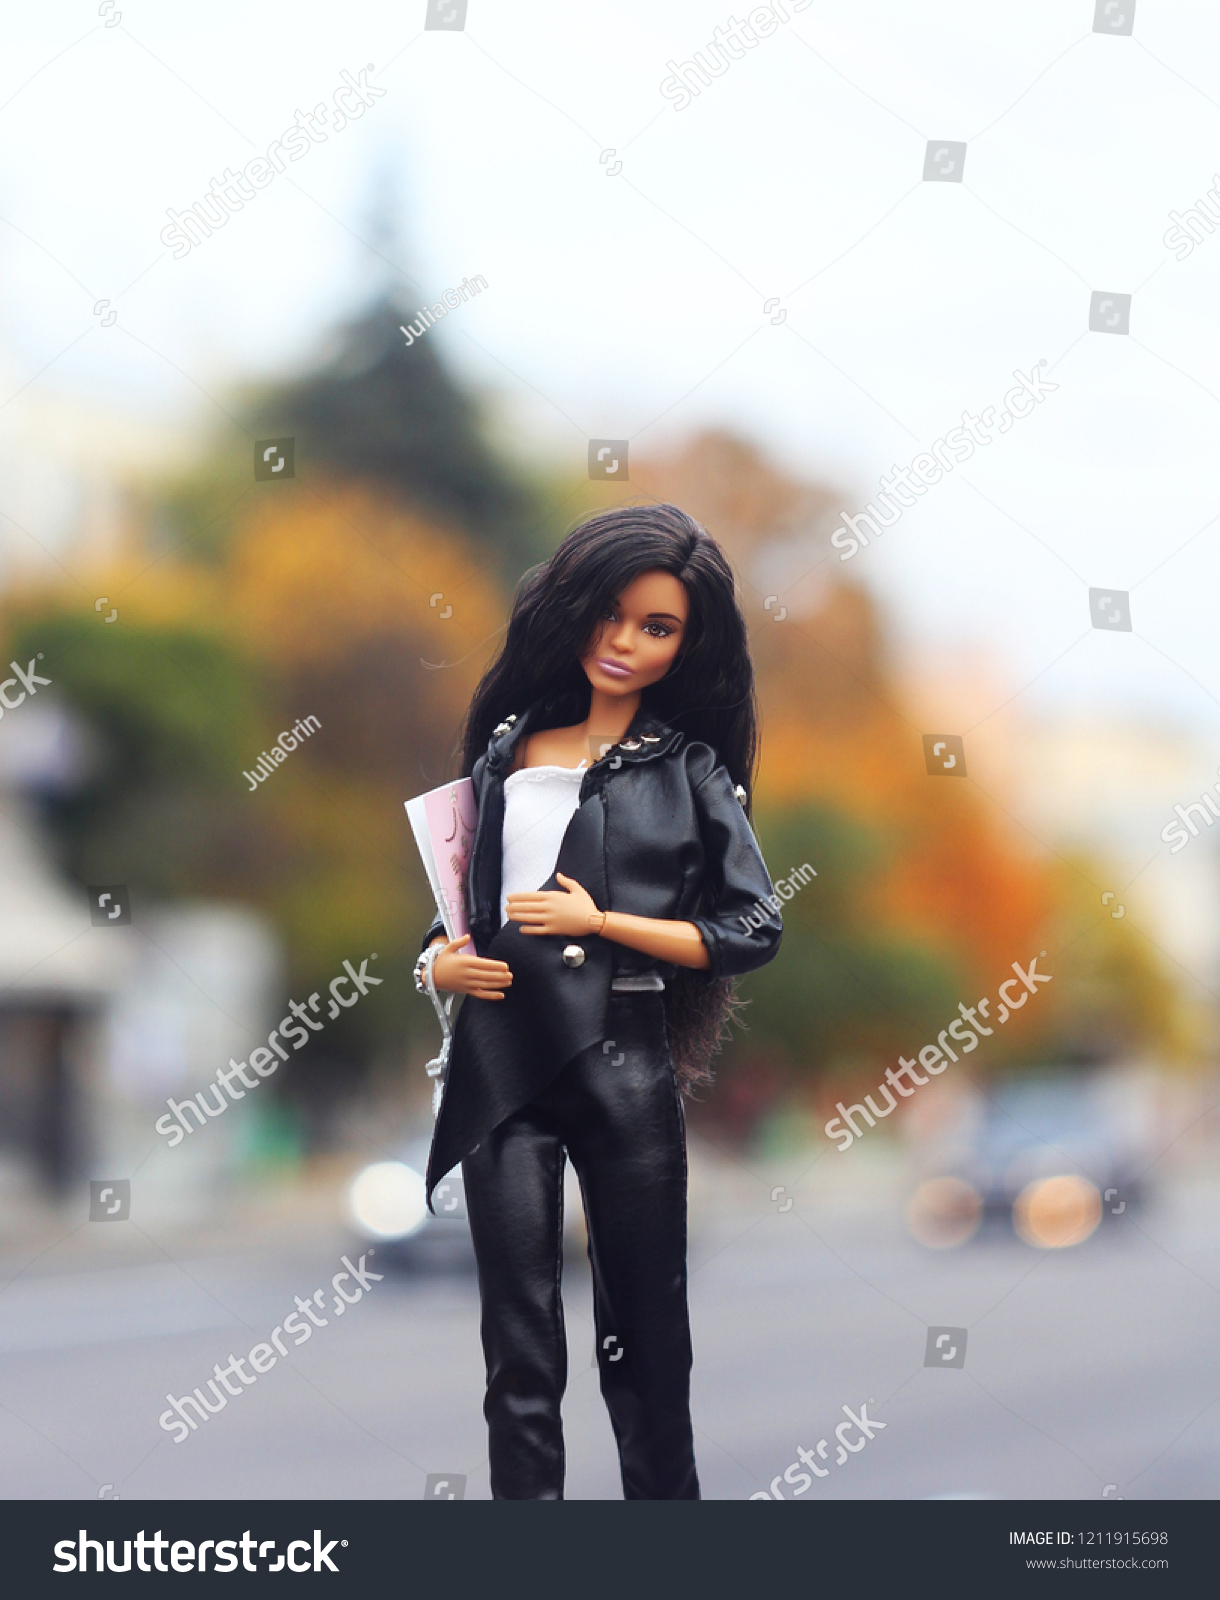 Beautiful Darkskinned Doll Black Hair Leather Stockfoto Jetzt Bearbeiten 1211915698